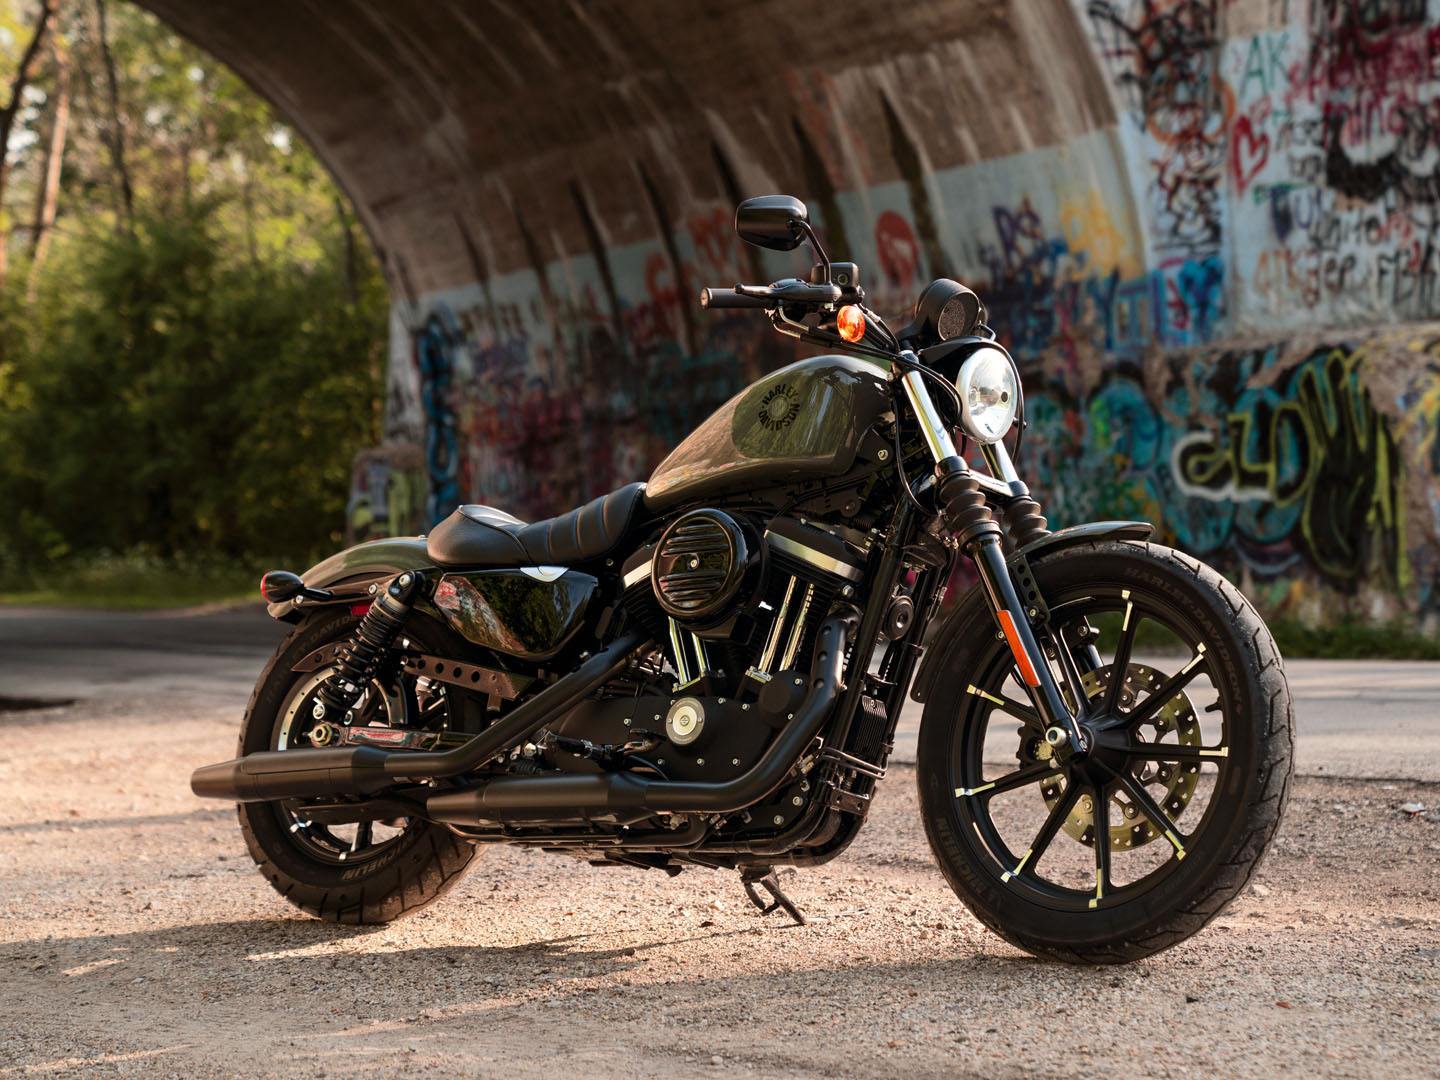 2021 Harley-Davidson Iron 883™ in Scott, Louisiana - Photo 7